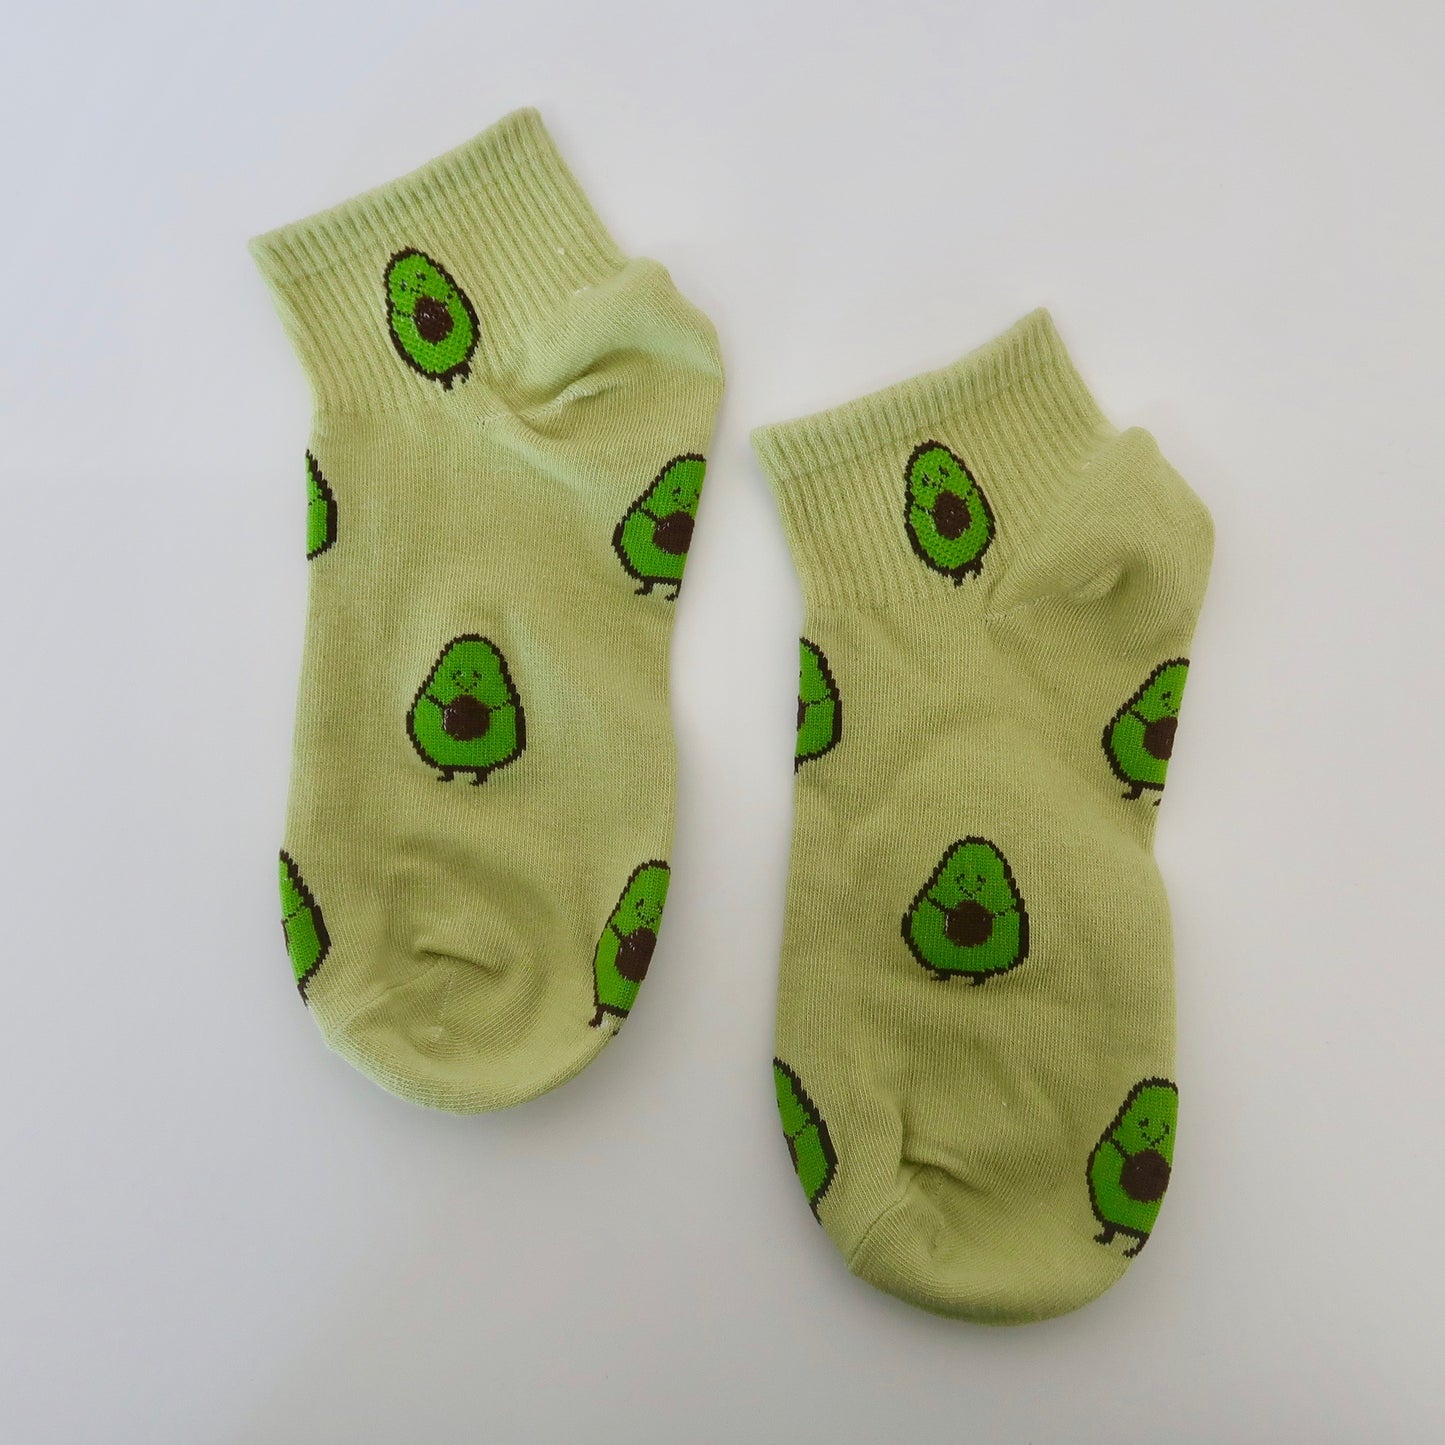 Design S - Cute Avocado Socks